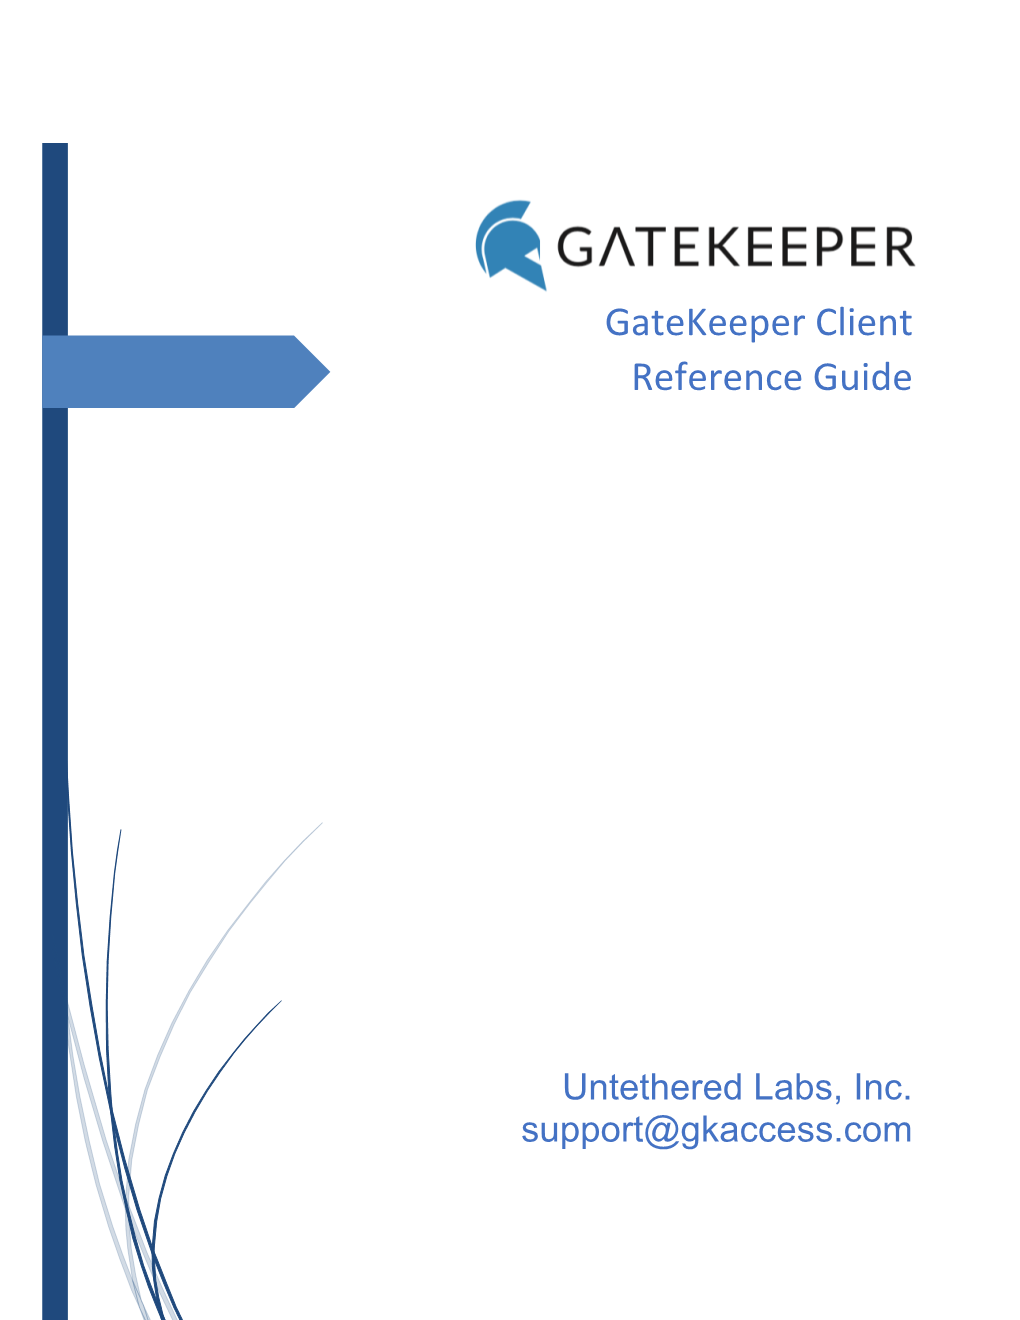 Gatekeeper Enterprise Client Reference Guide